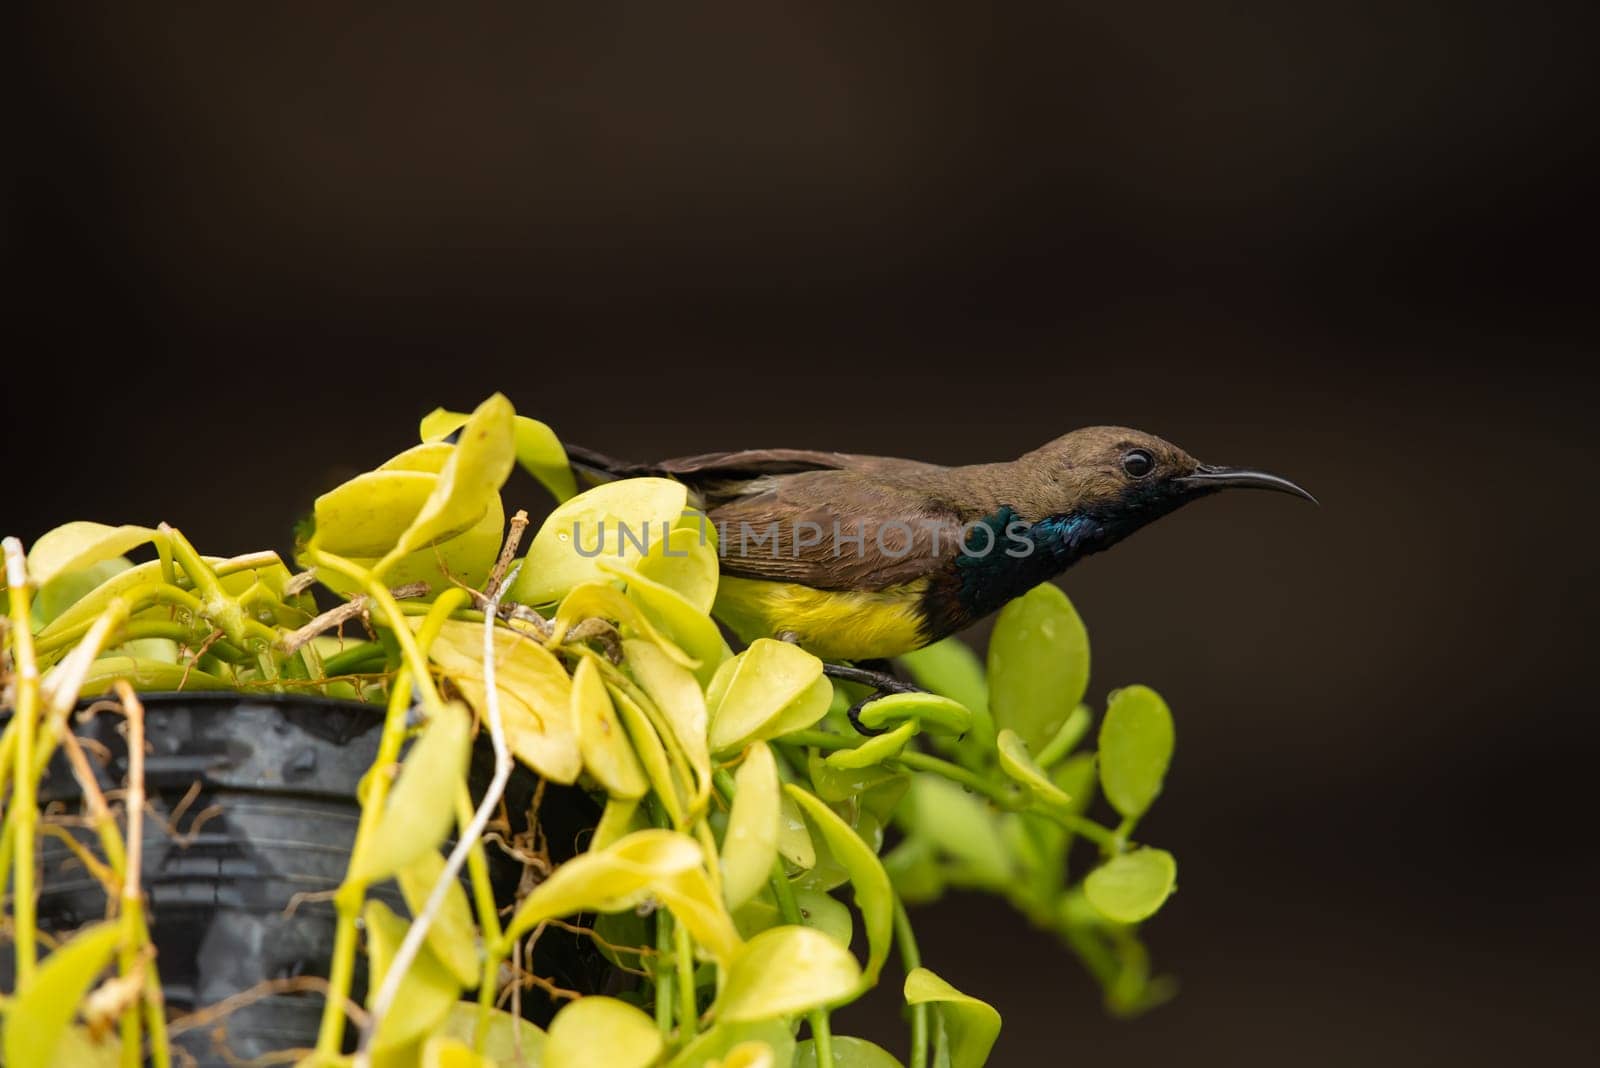 Bird (Olive-backed sunbird) on tree in nature wild by PongMoji